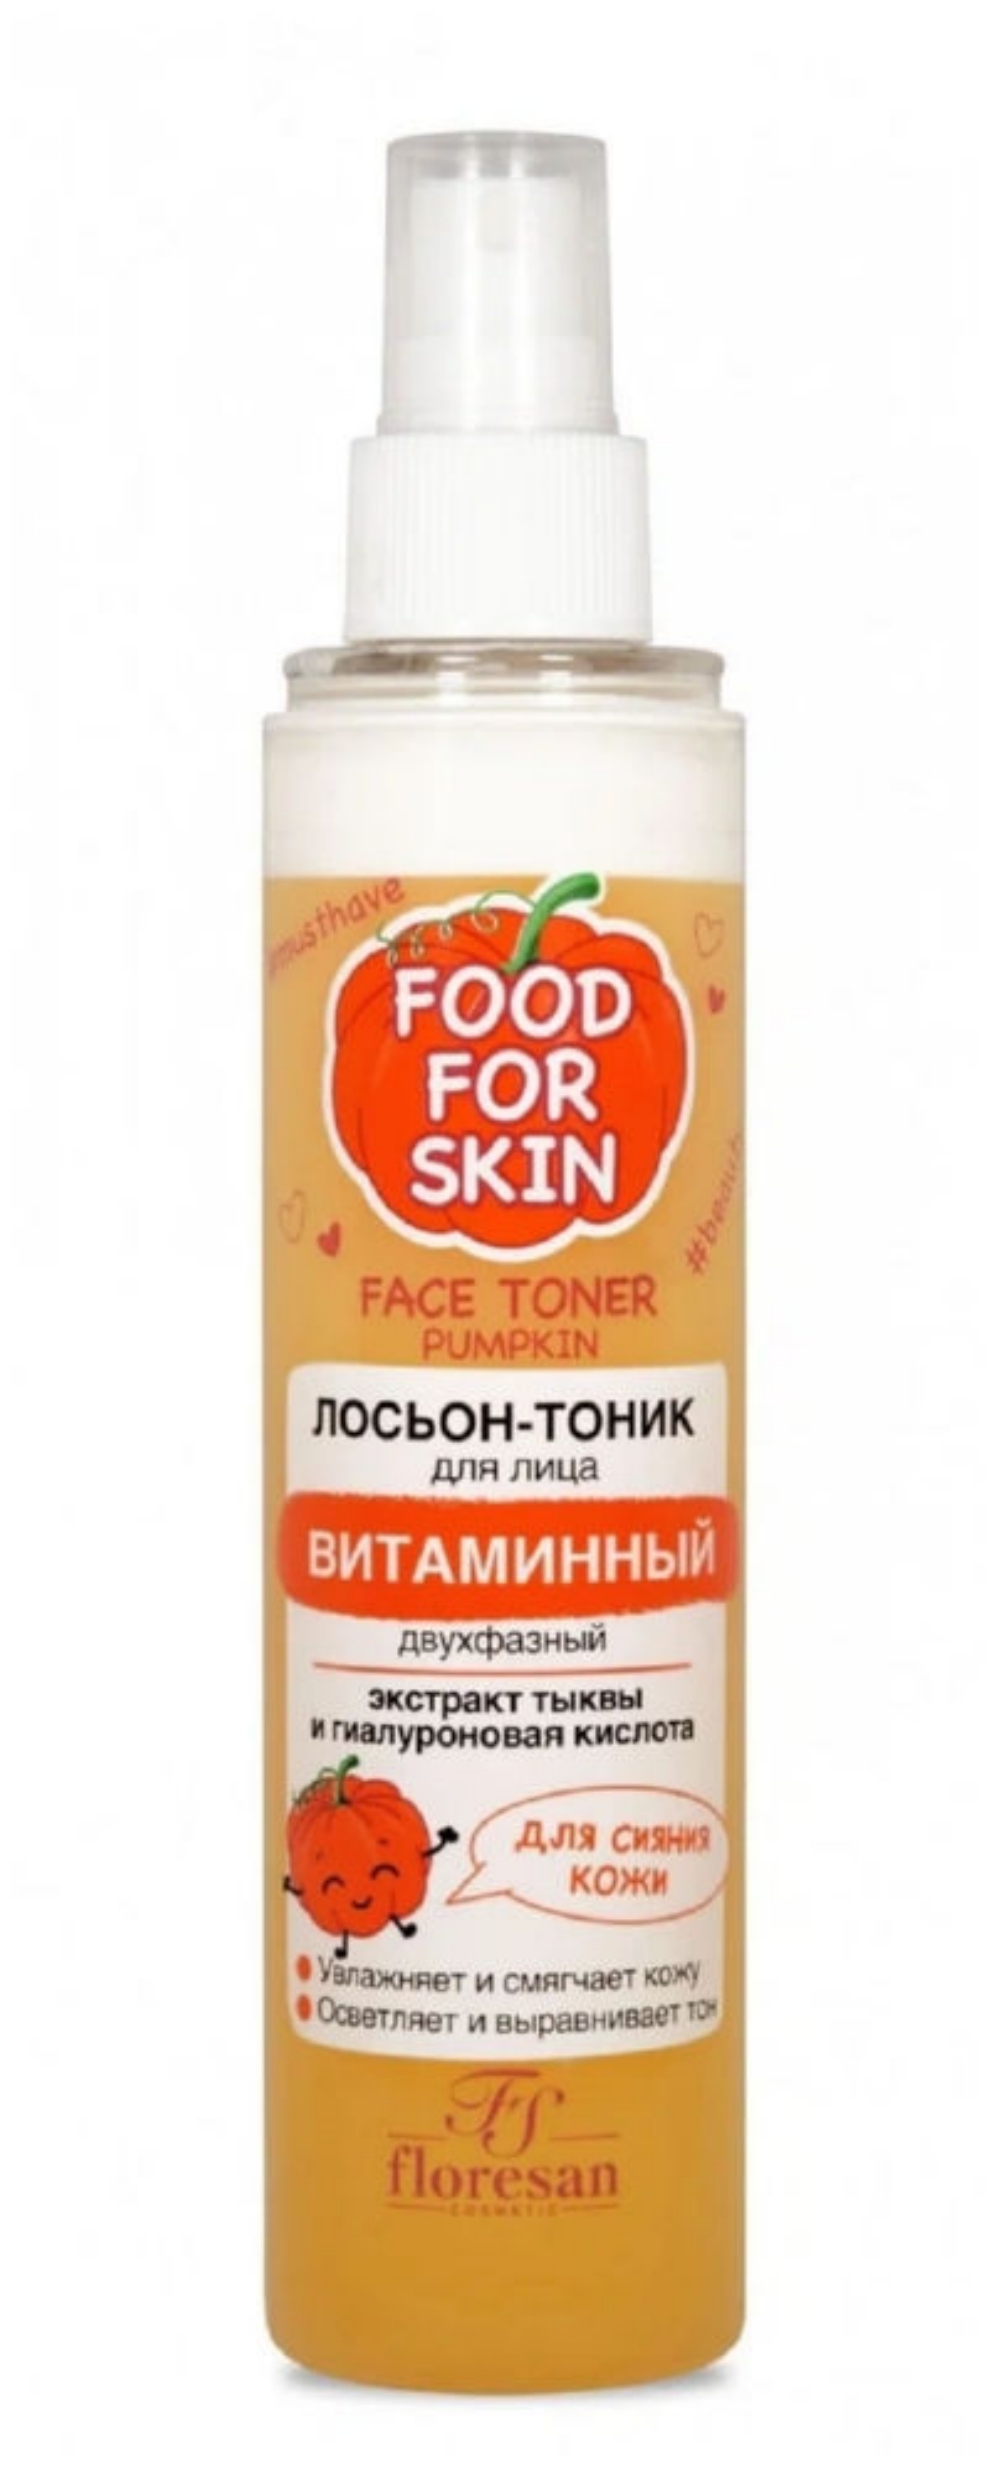 Флоресан (Floresan) Food for skin ТЫКВА Лосьон-Тоник Витаминный 200мл Ф-711